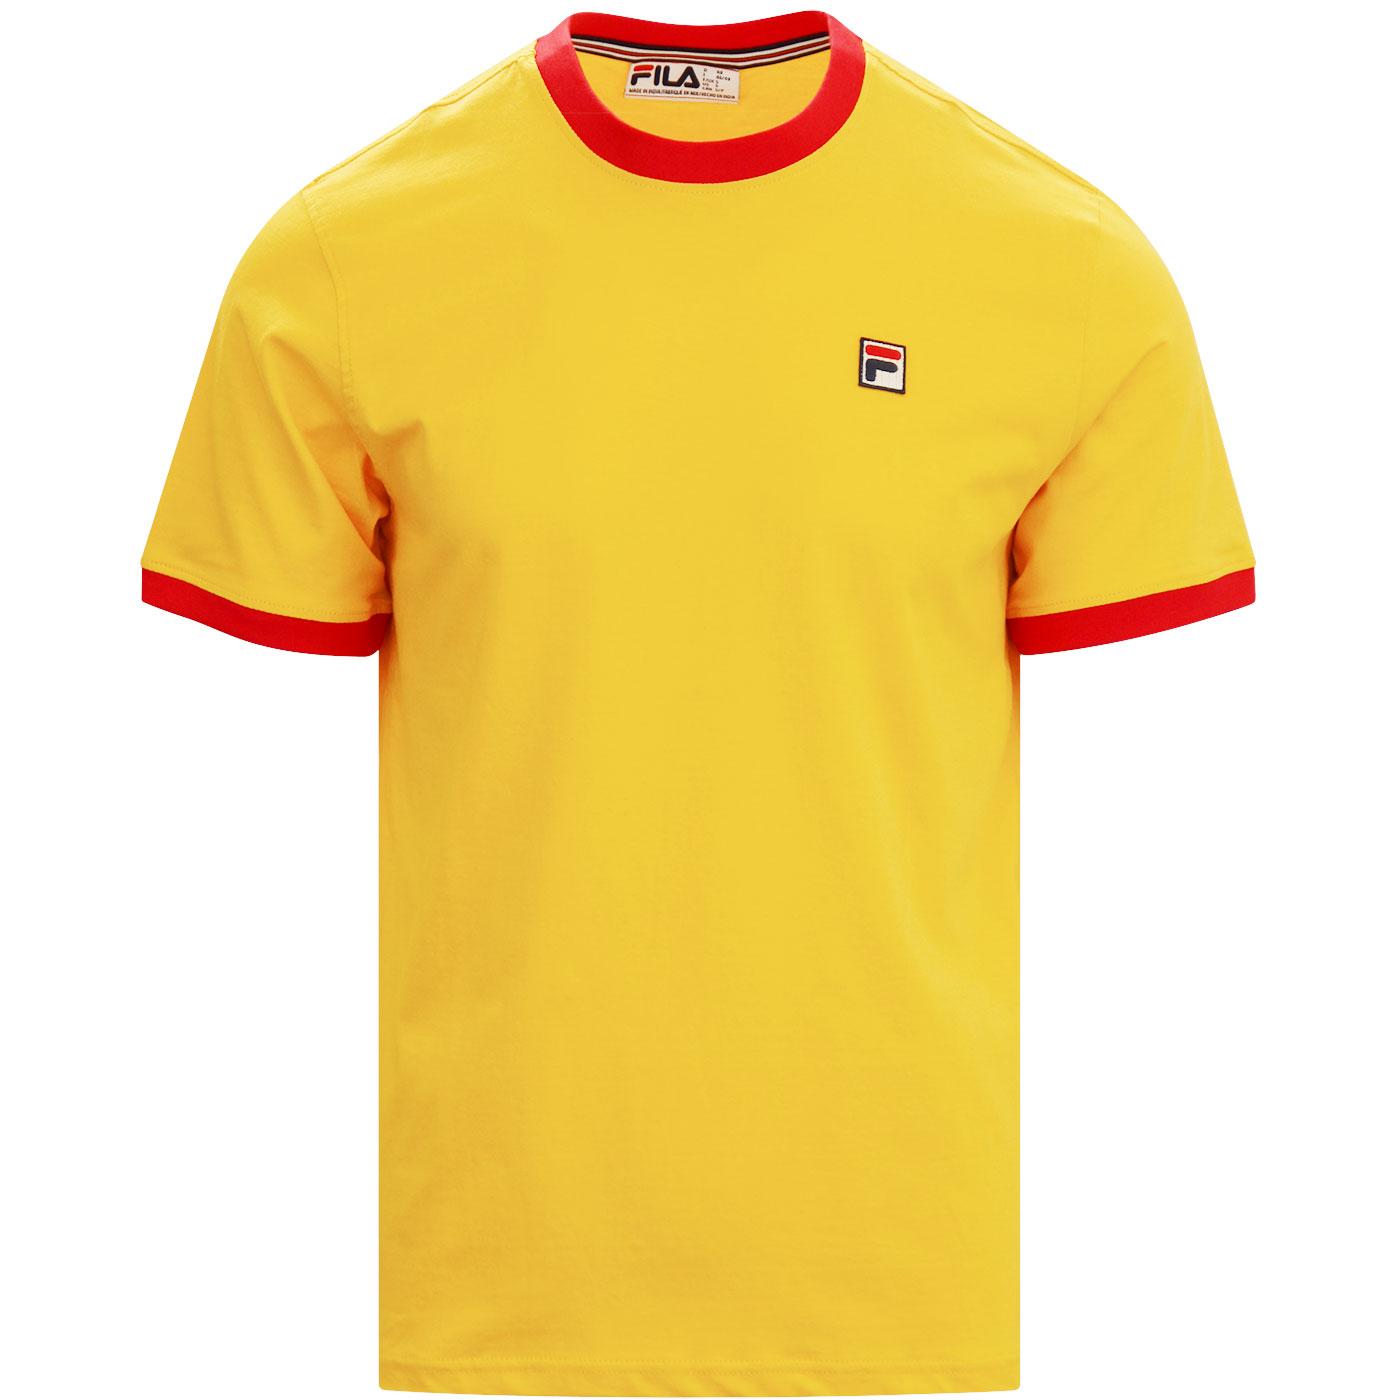 Marconi FILA VINTAGE Retro 70s Ringer T-shirt GOLD